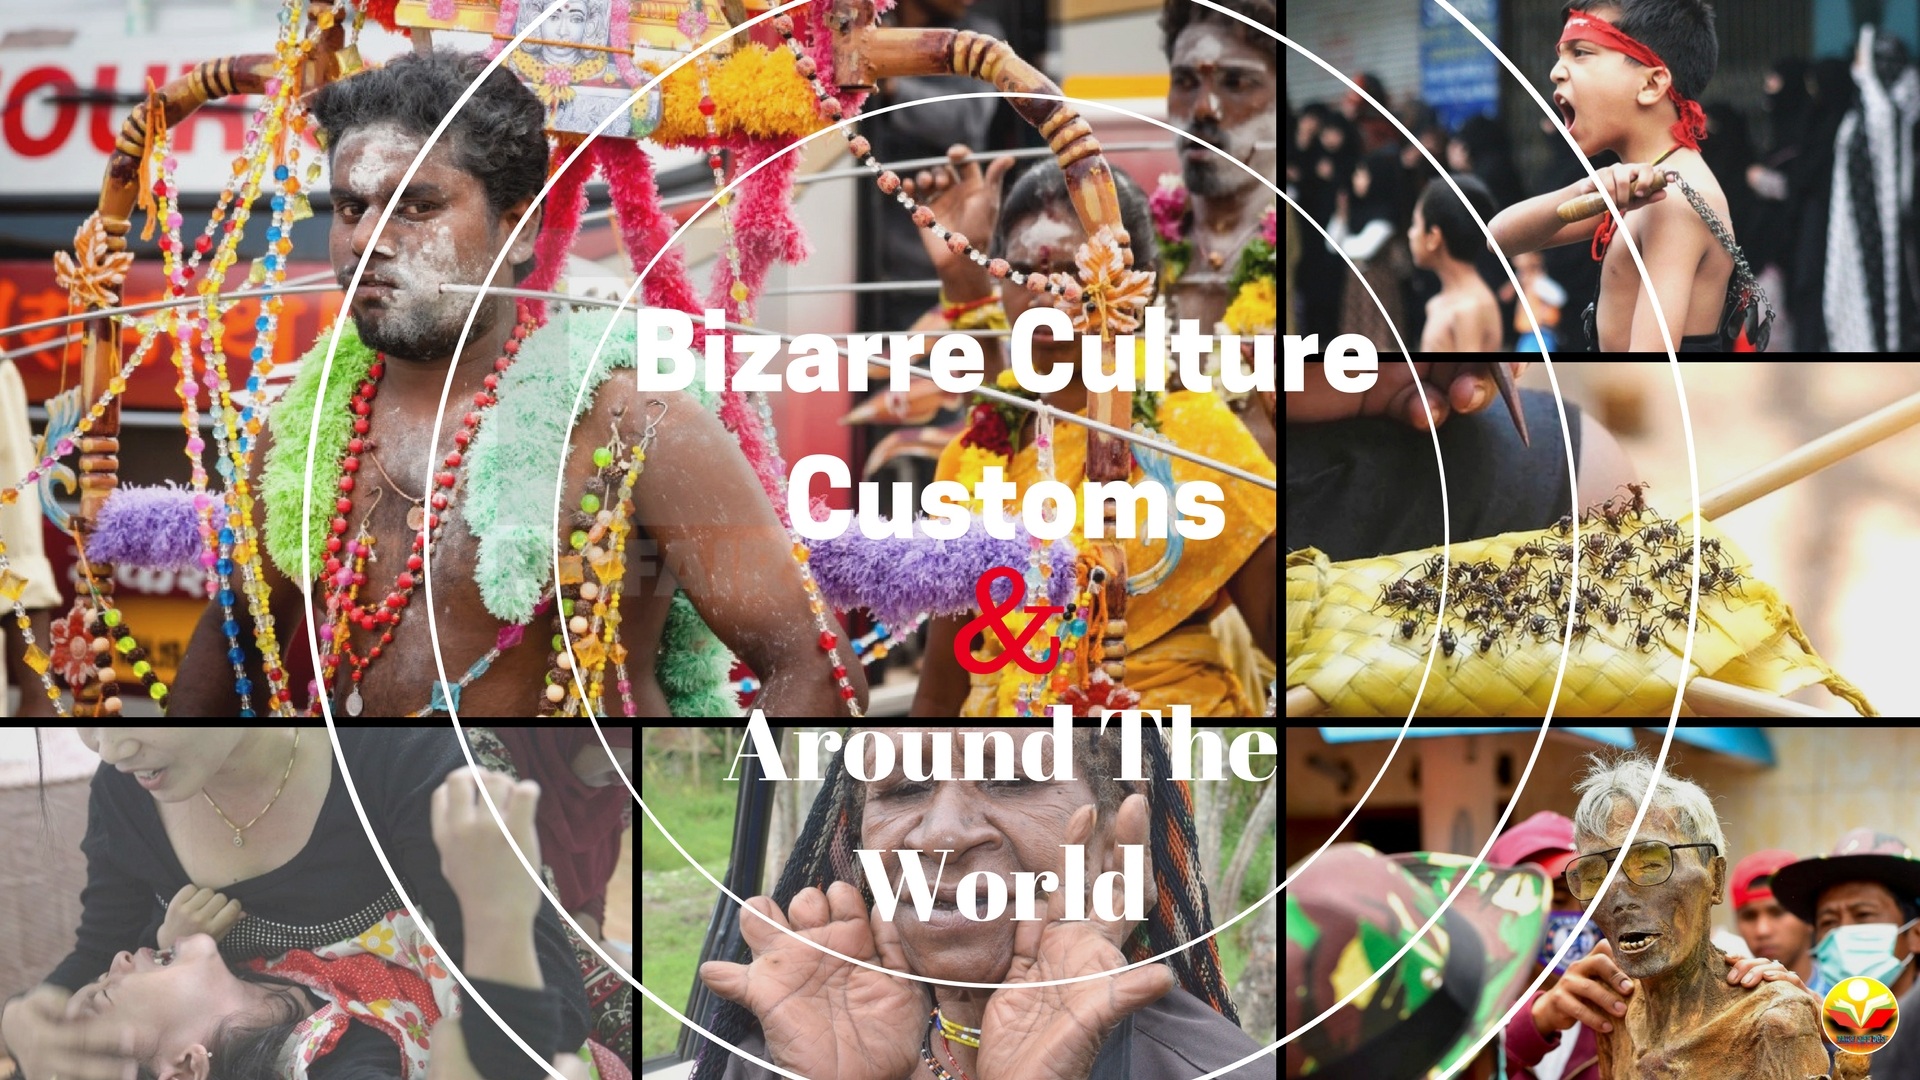 Bizarre Culture & Customs Around The World (1)